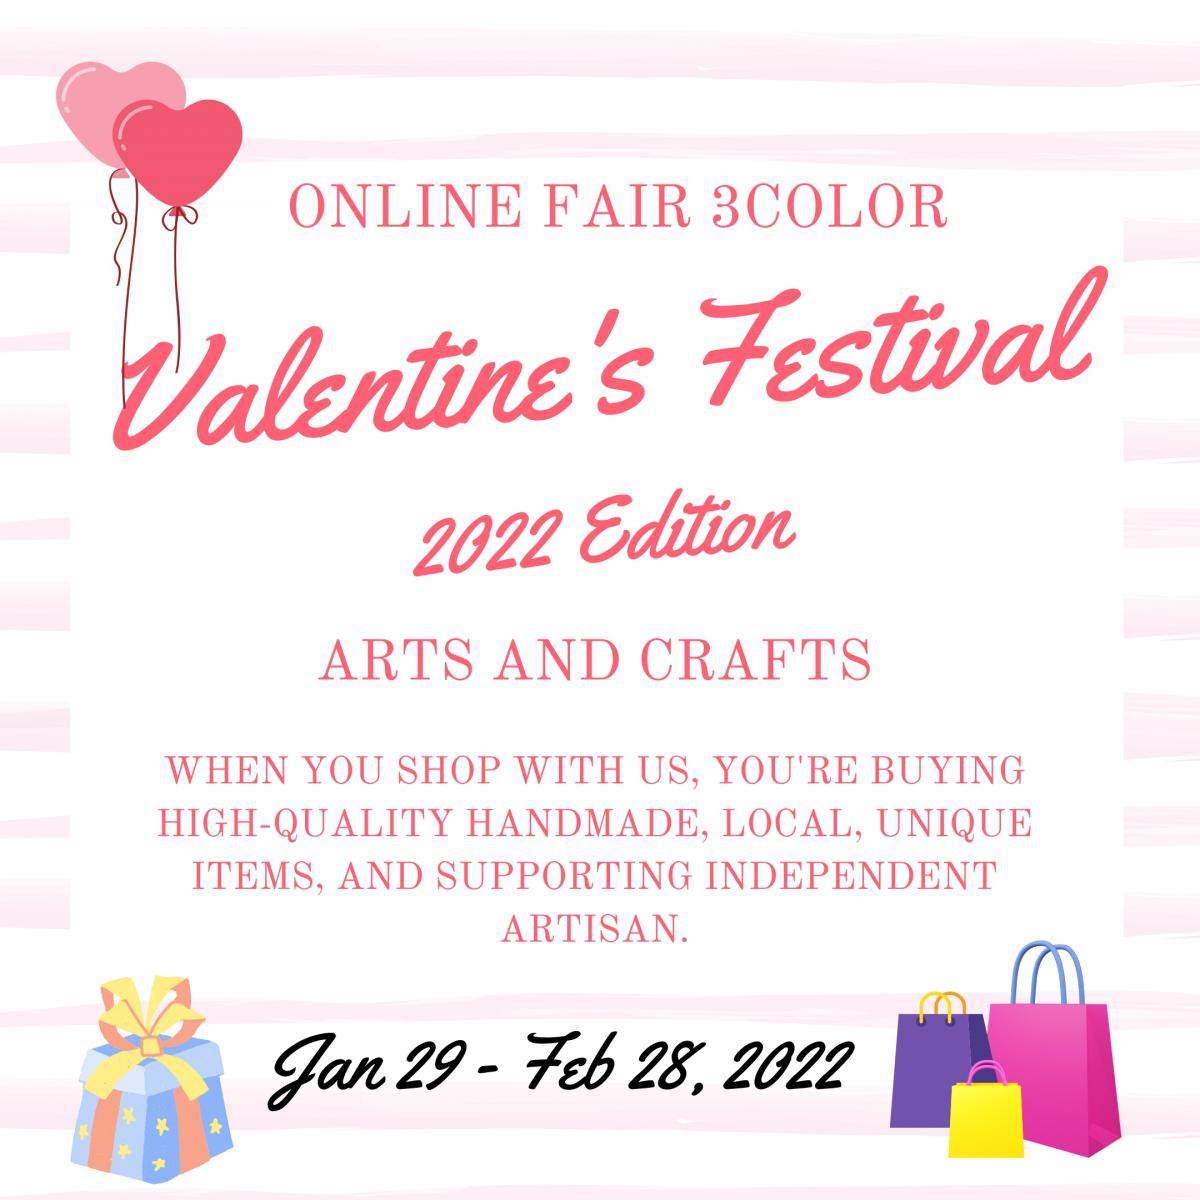 Valentine's Festival "Online Fair 3Color" 2022 Edition cover image